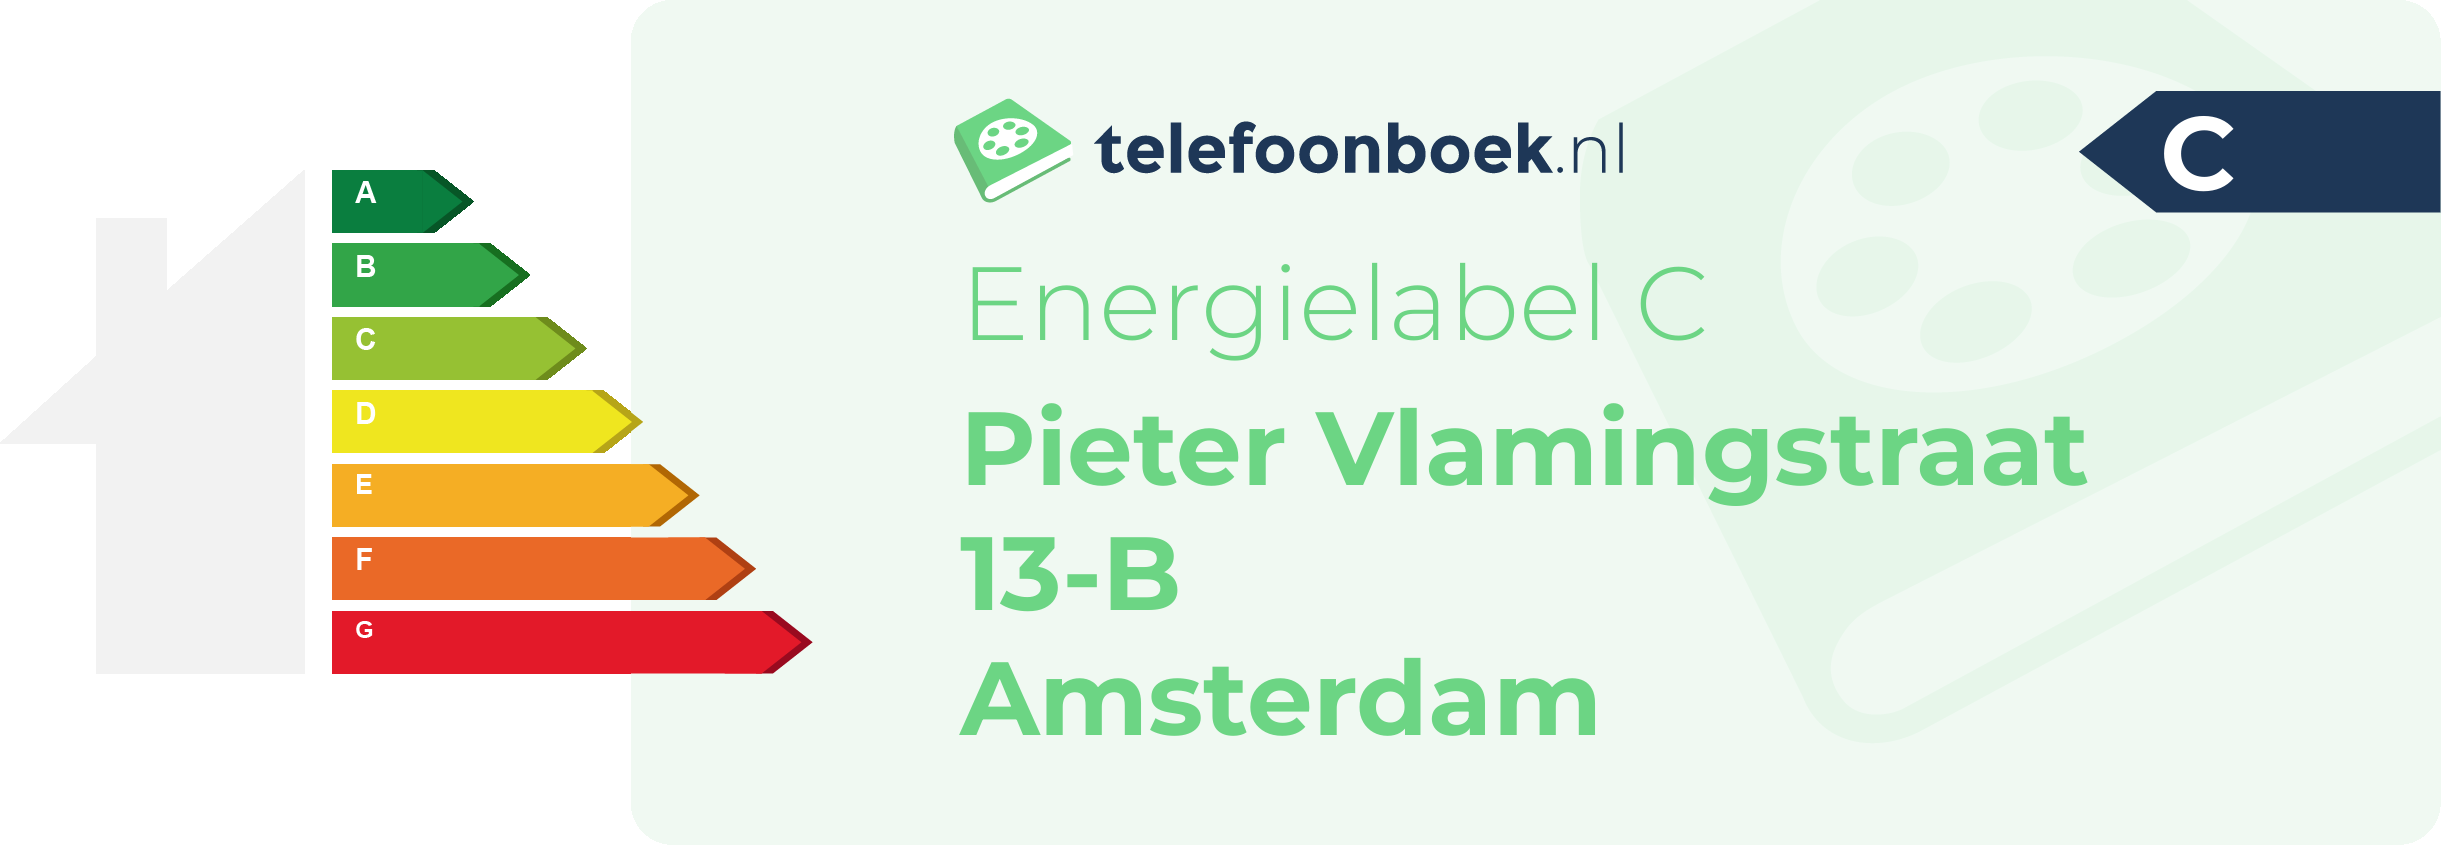 Energielabel Pieter Vlamingstraat 13-B Amsterdam